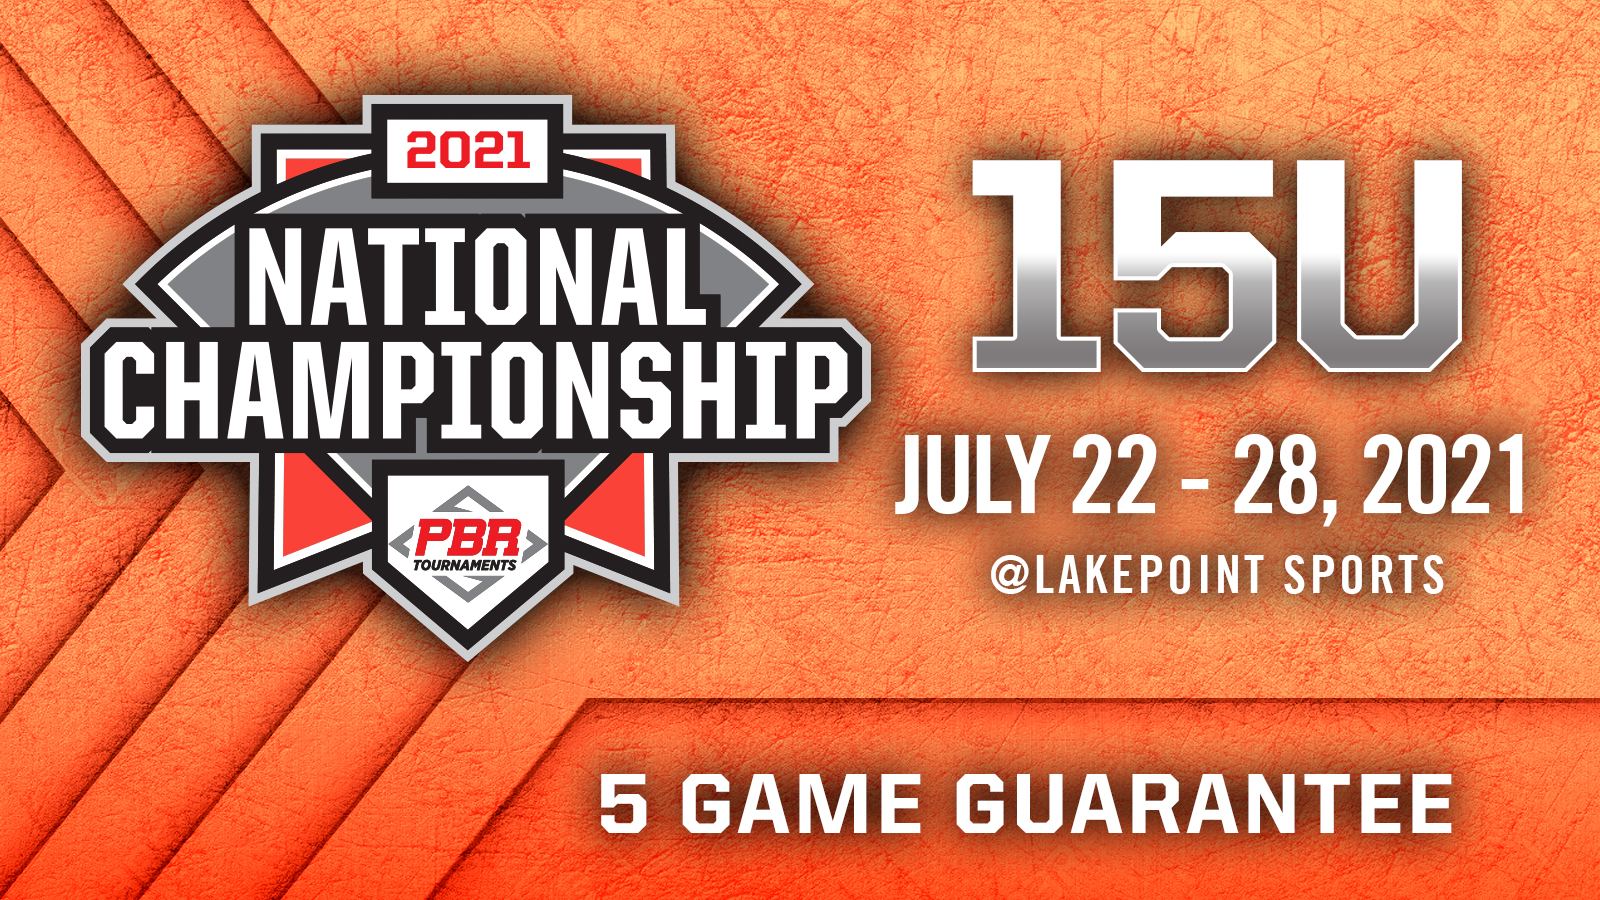 15U National Championship LakePoint Sports